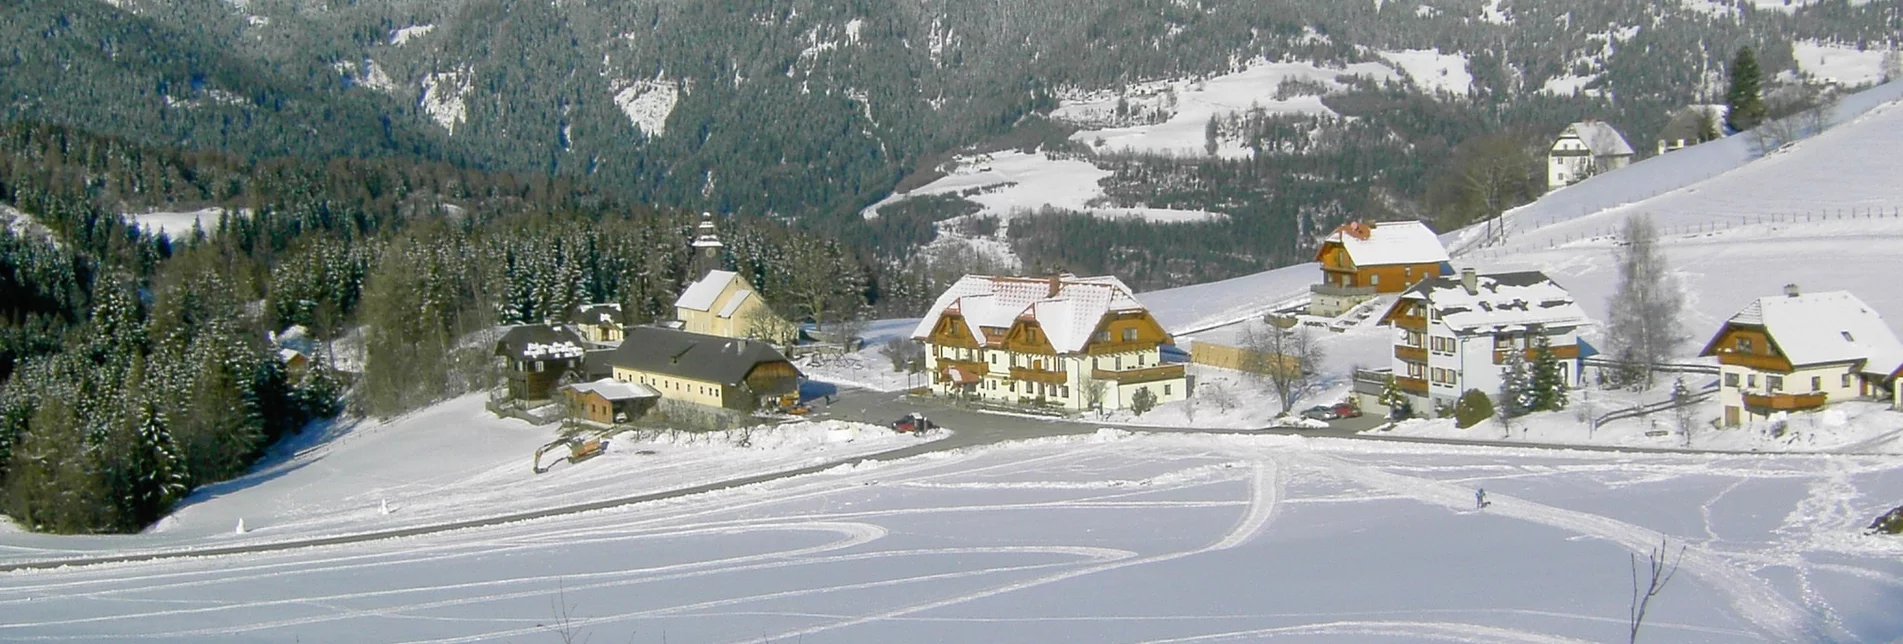 Langlauf klassisch Karchau_Moser-Loipe - Touren-Impression #1 | © Tourismusverband Region Murau